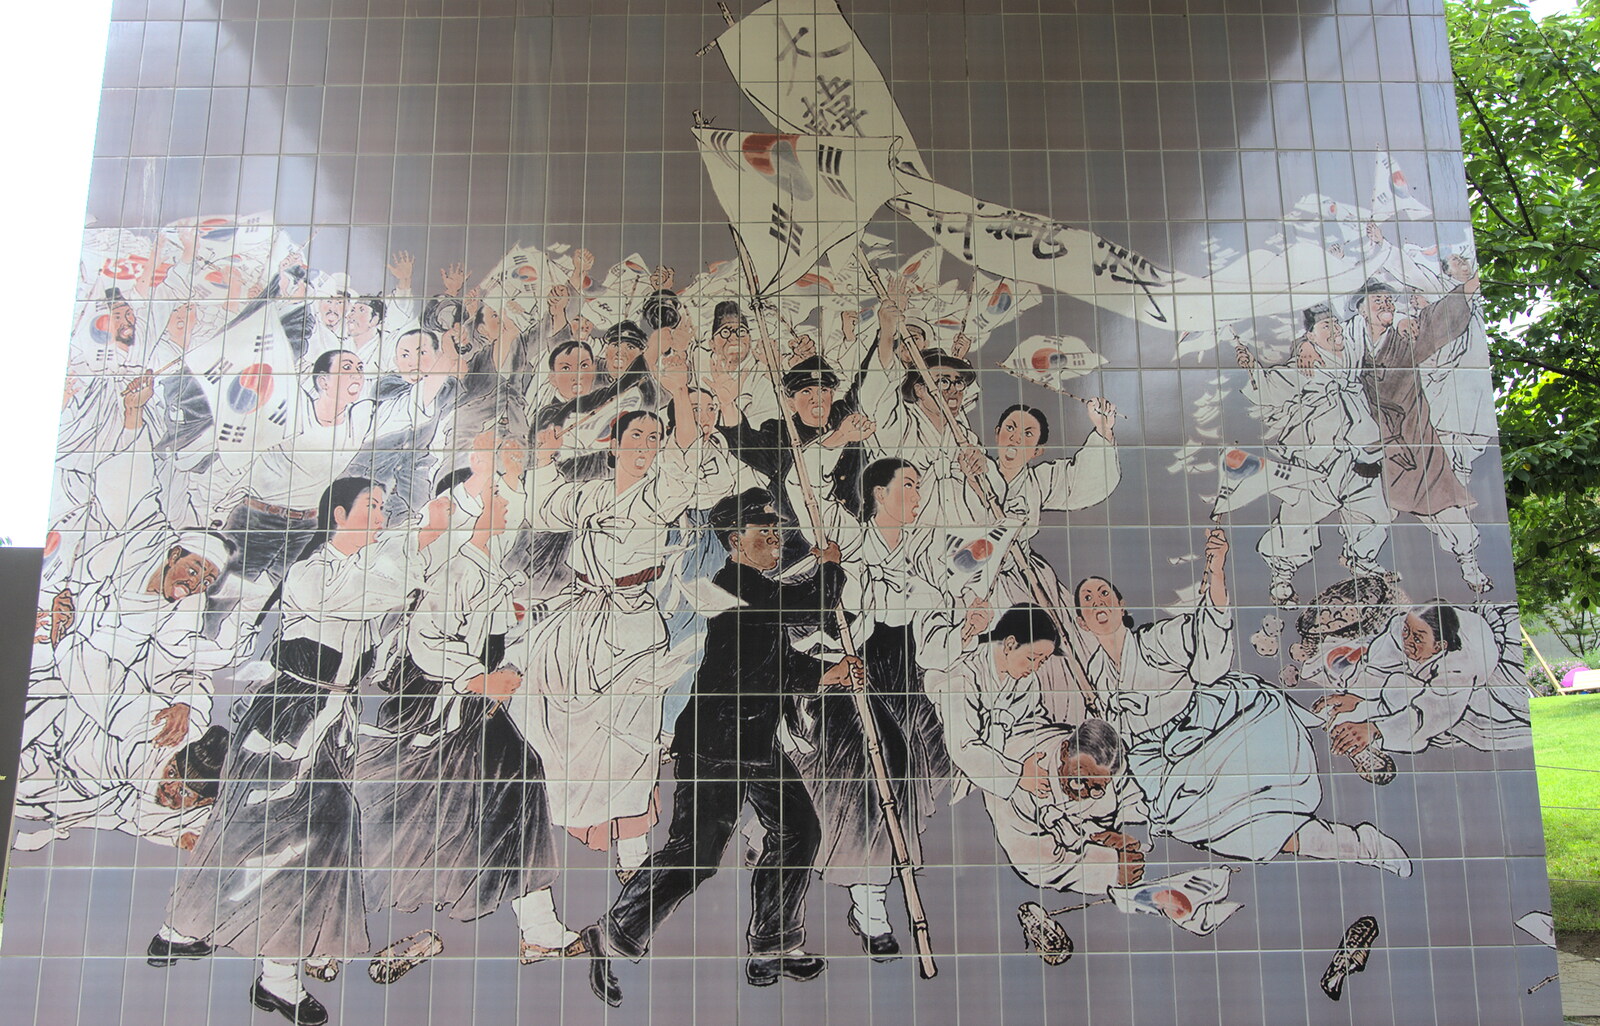 A cool tiled mural from Seomun Market, Daegu, South Korea - 1st July 2012